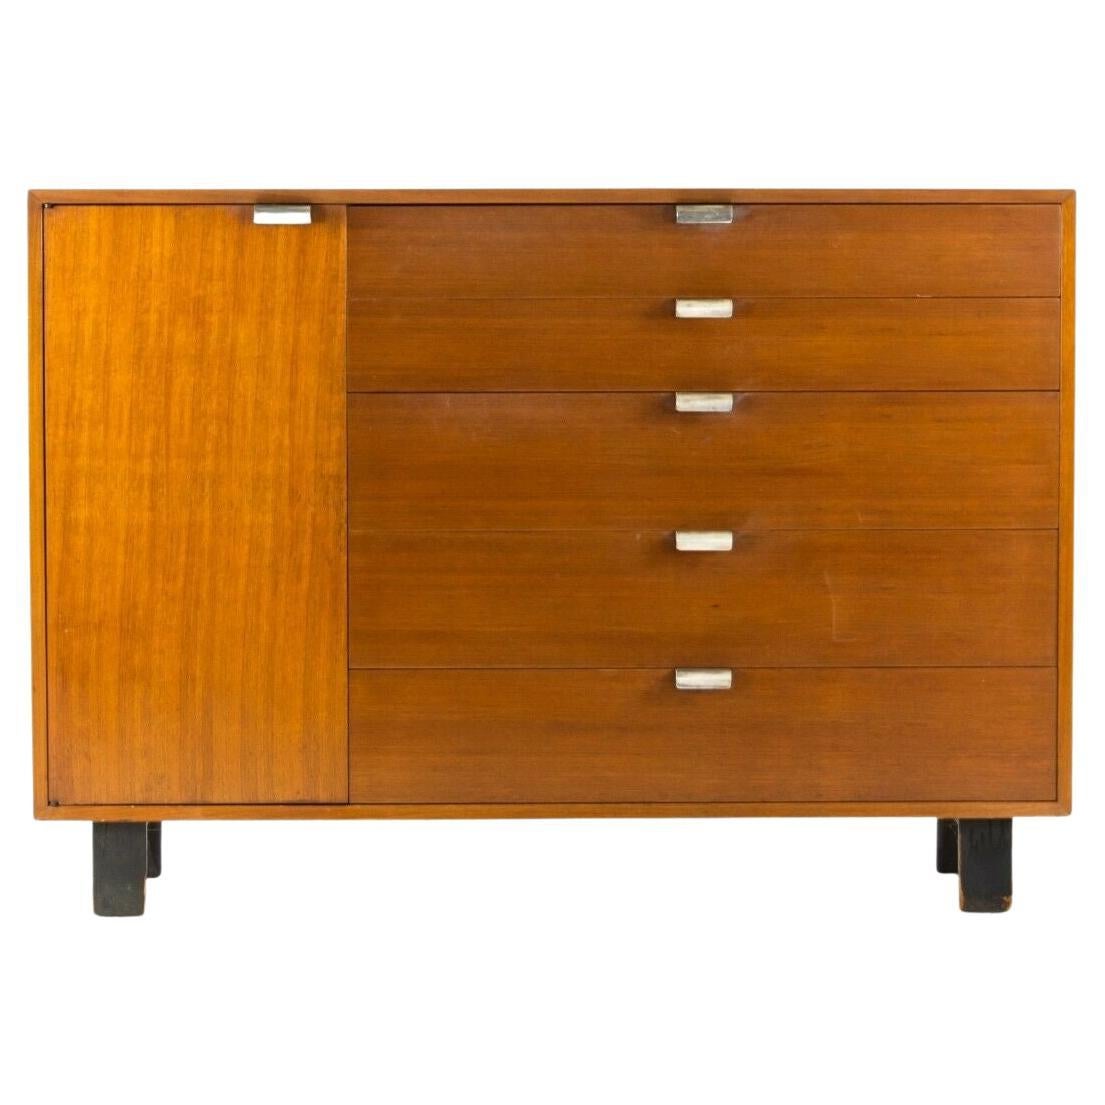 1954 George Nelson Herman Miller Basic Cabinet Series 4936 Credenza / Dresser For Sale